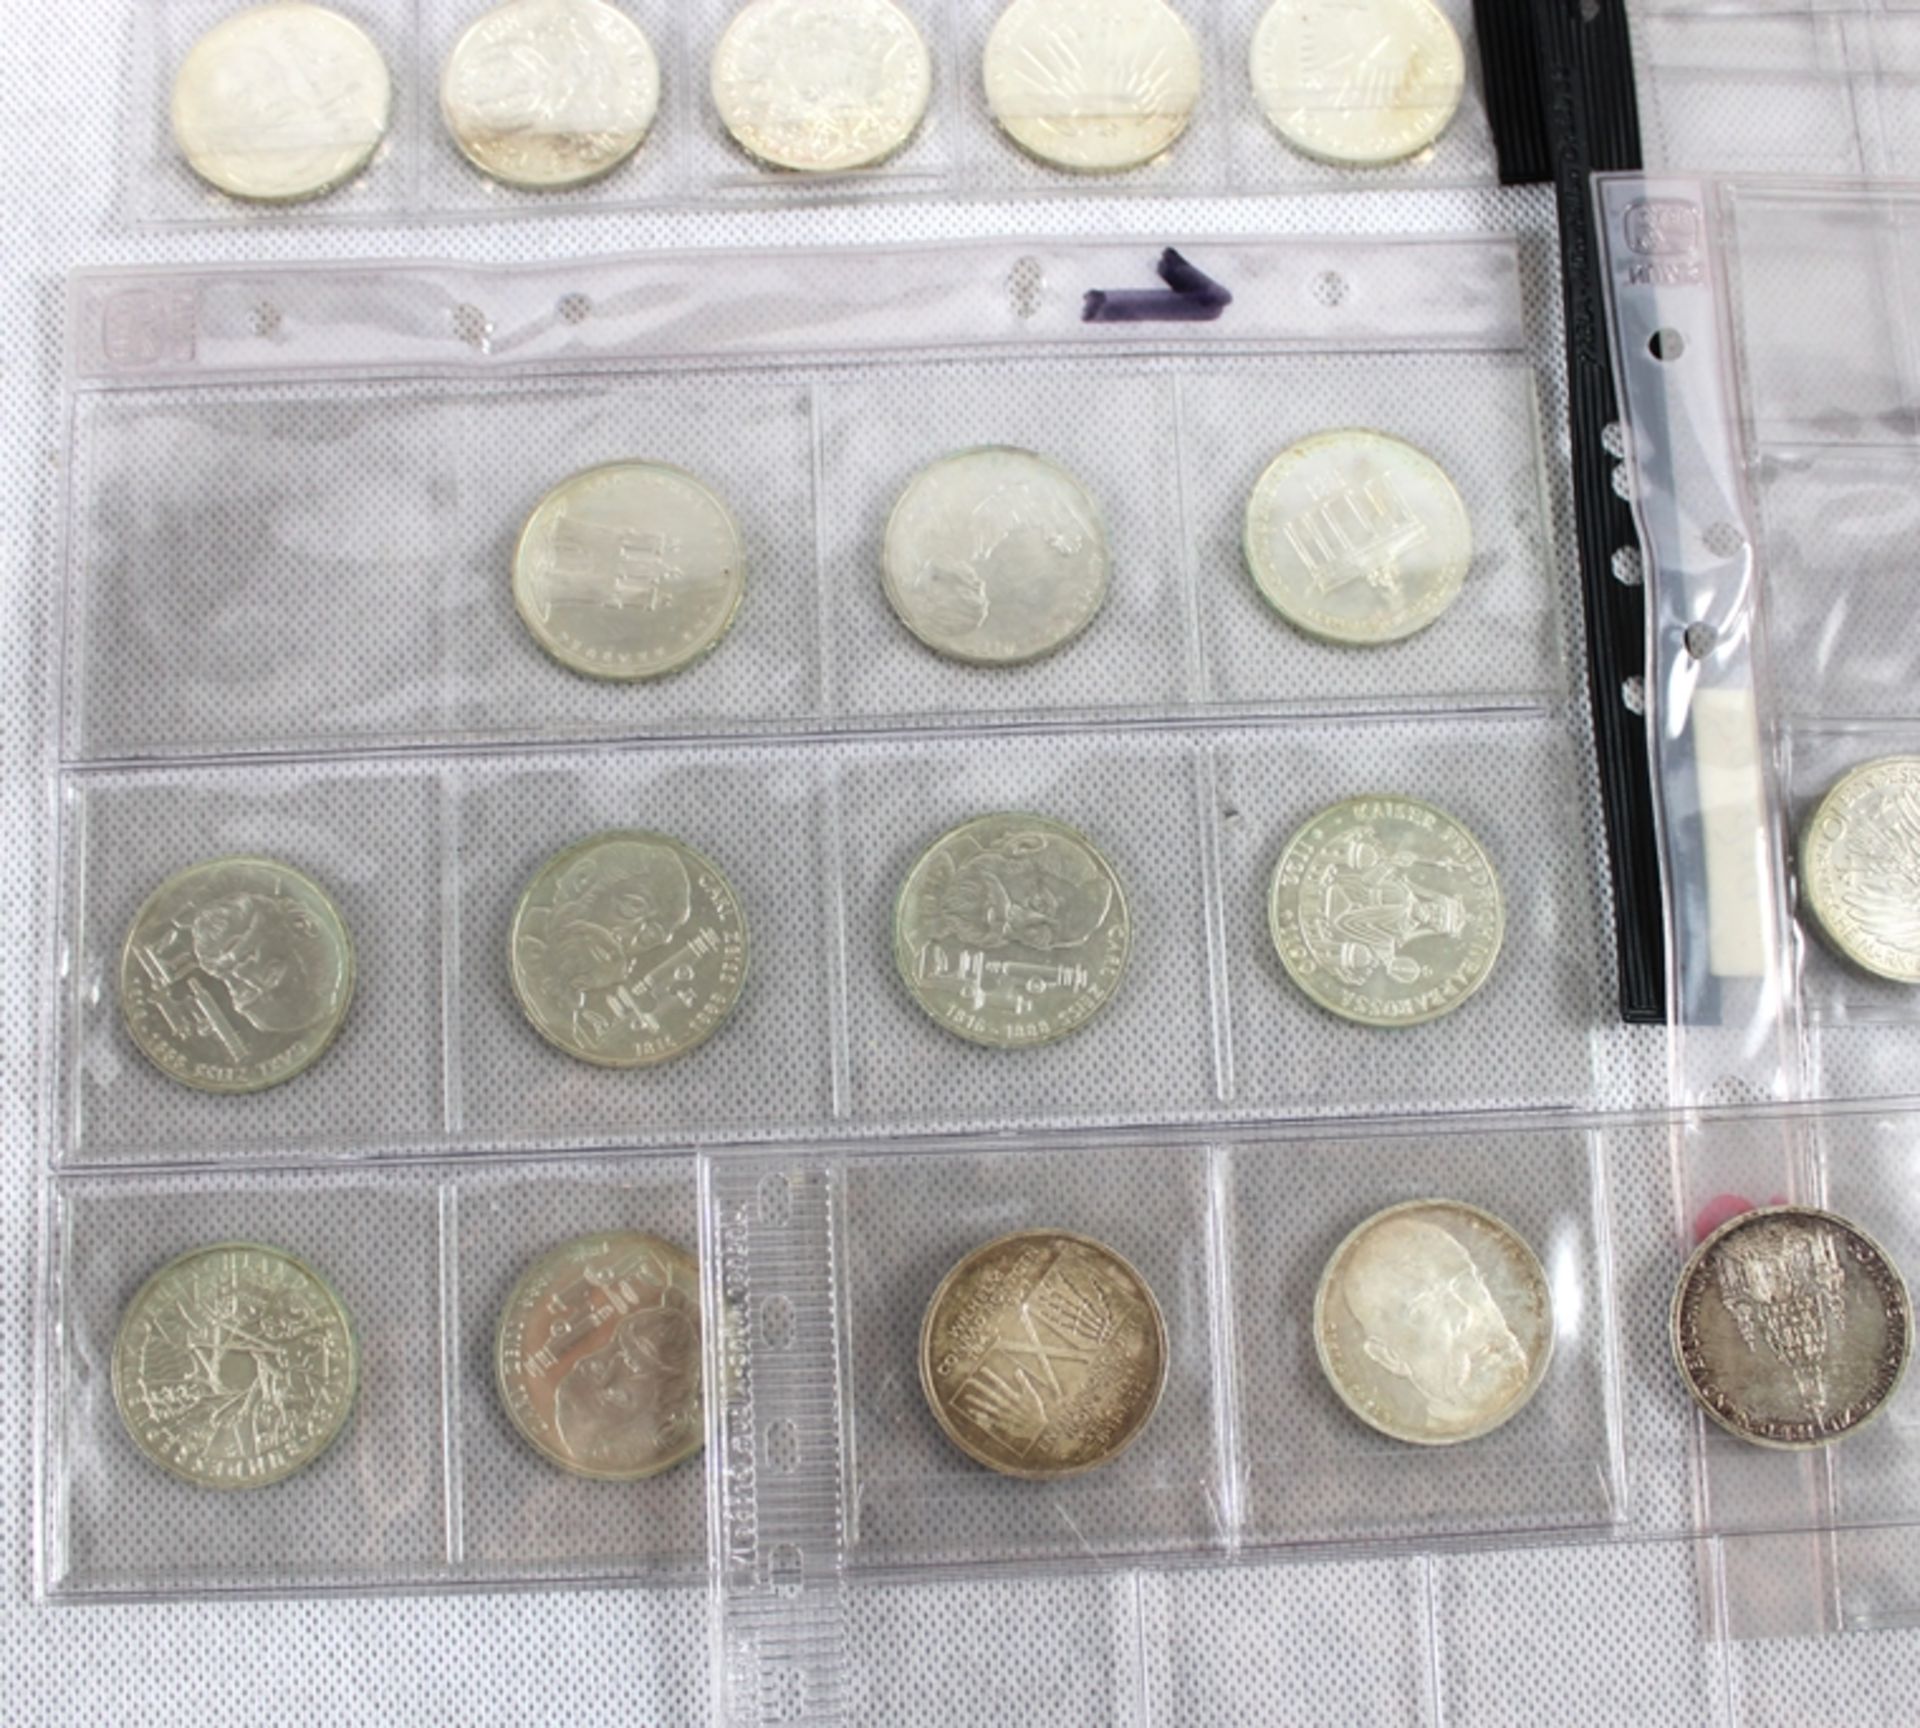 5 DM u. 10 DM Silbermünzen Gedenkmünzen Münzsammlung, darunter 5 x 5 DM u. 73 x 10 DM - Image 5 of 5